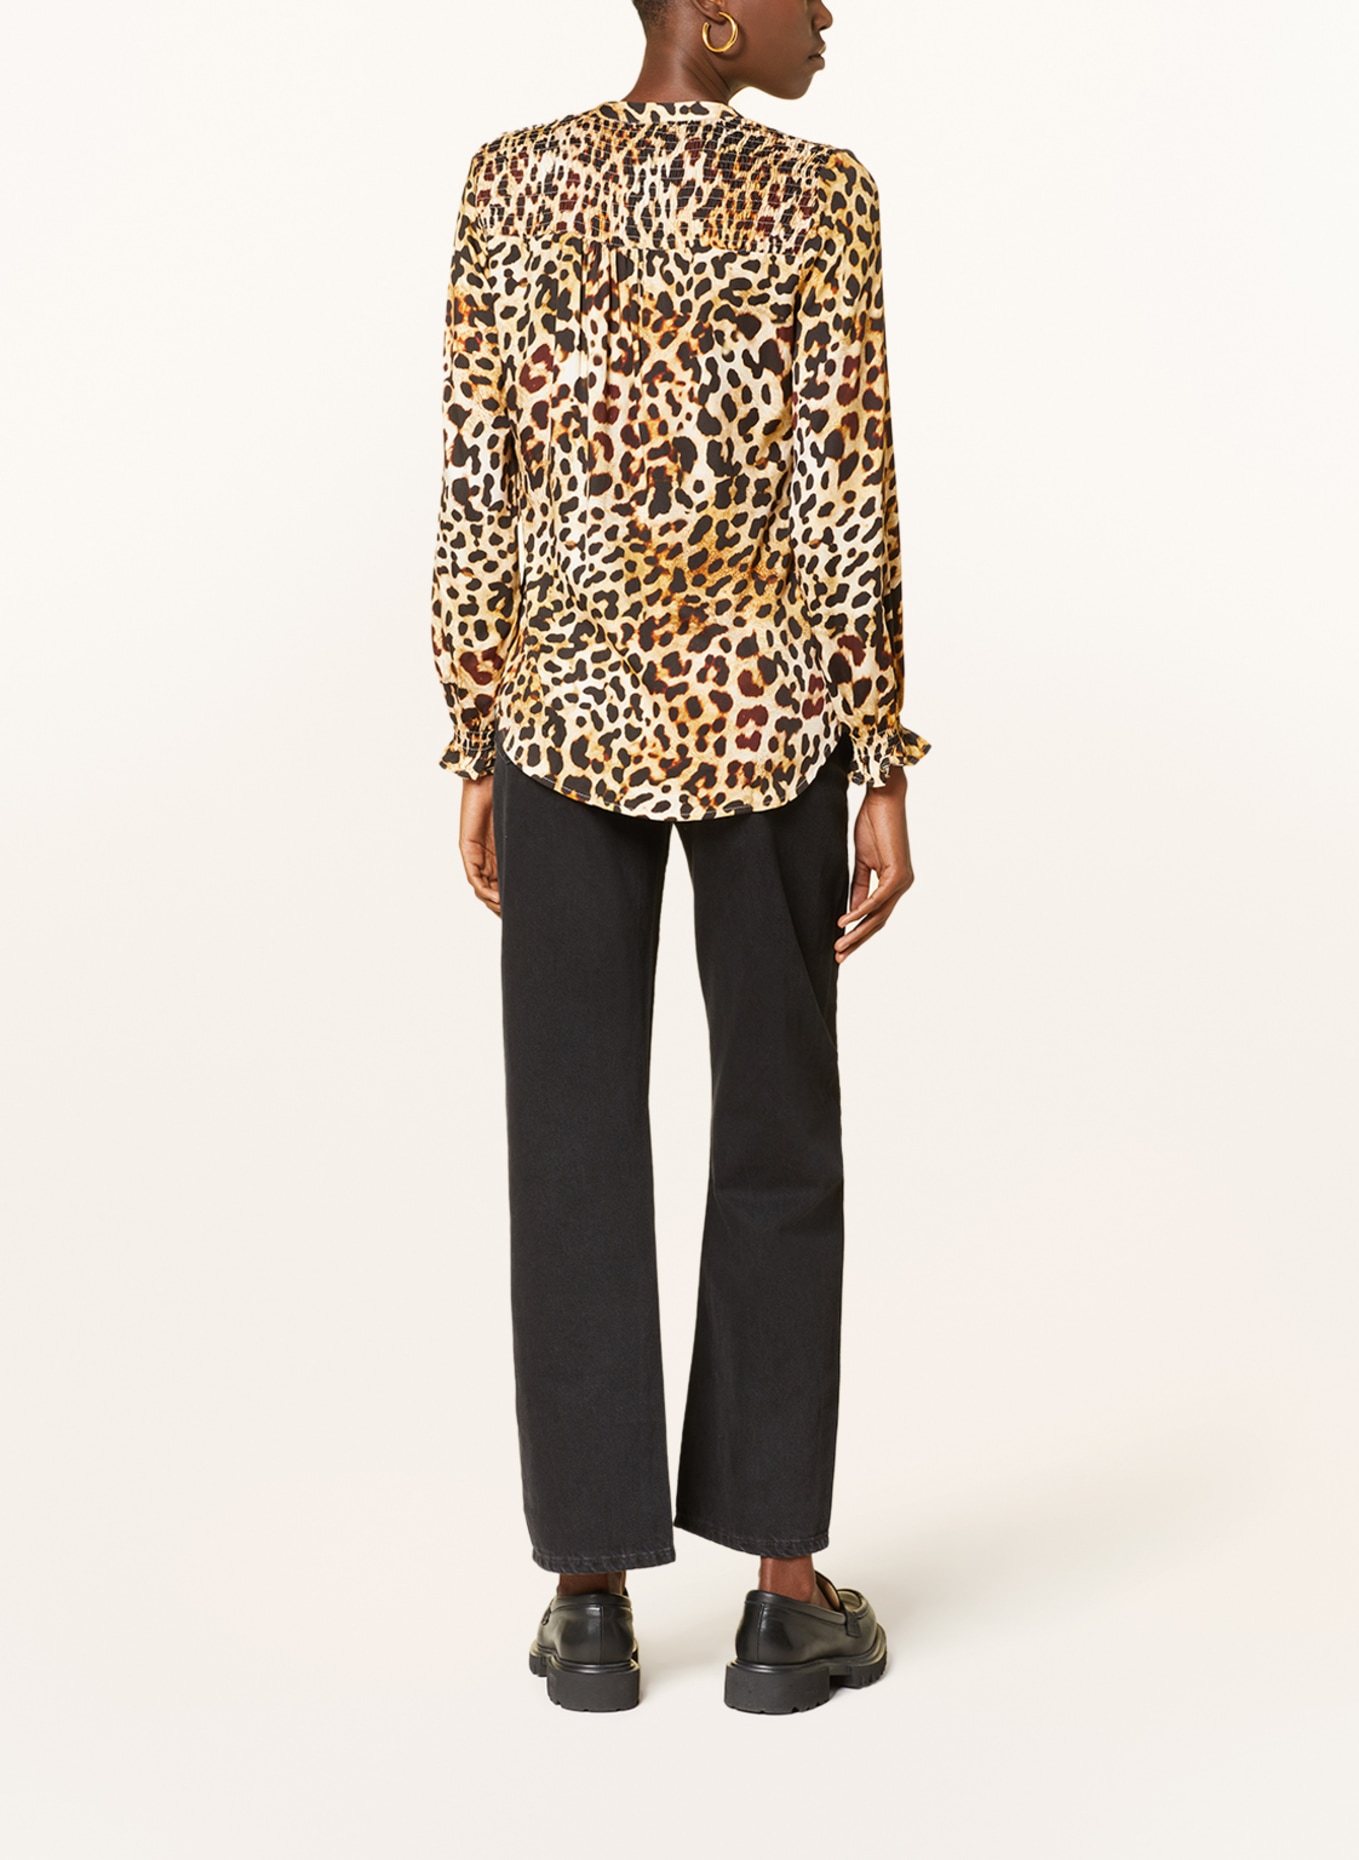 Emily VAN DEN BERGH Shirt blouse with frills, Color: BLACK/ CREAM/ BEIGE (Image 3)